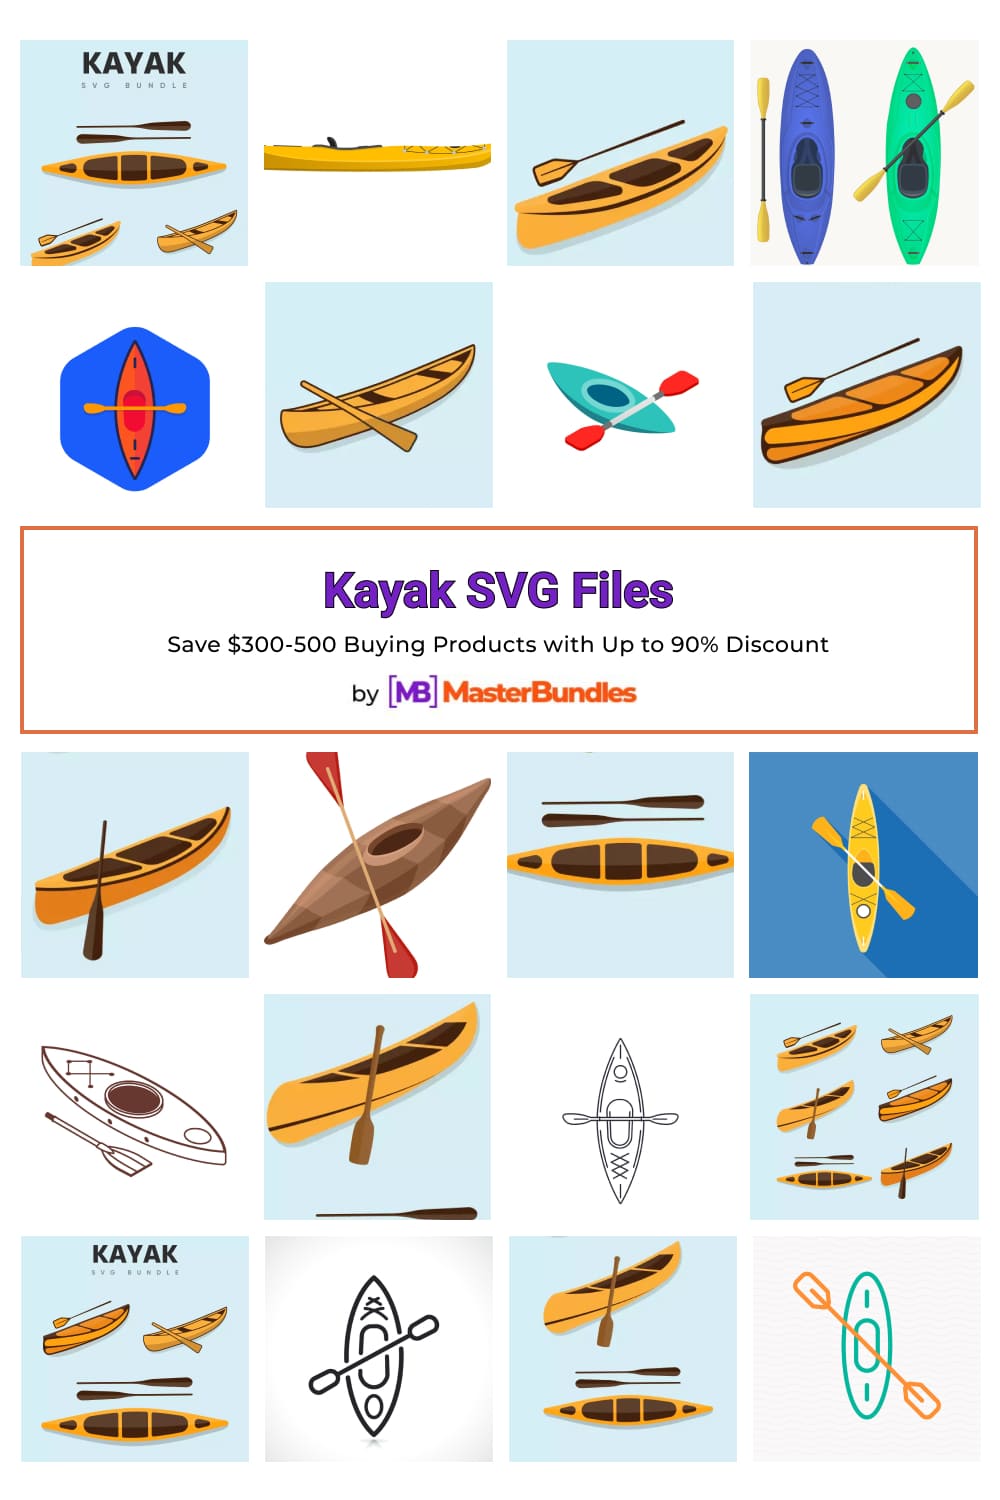 Kayak SVG Files for pinterest.